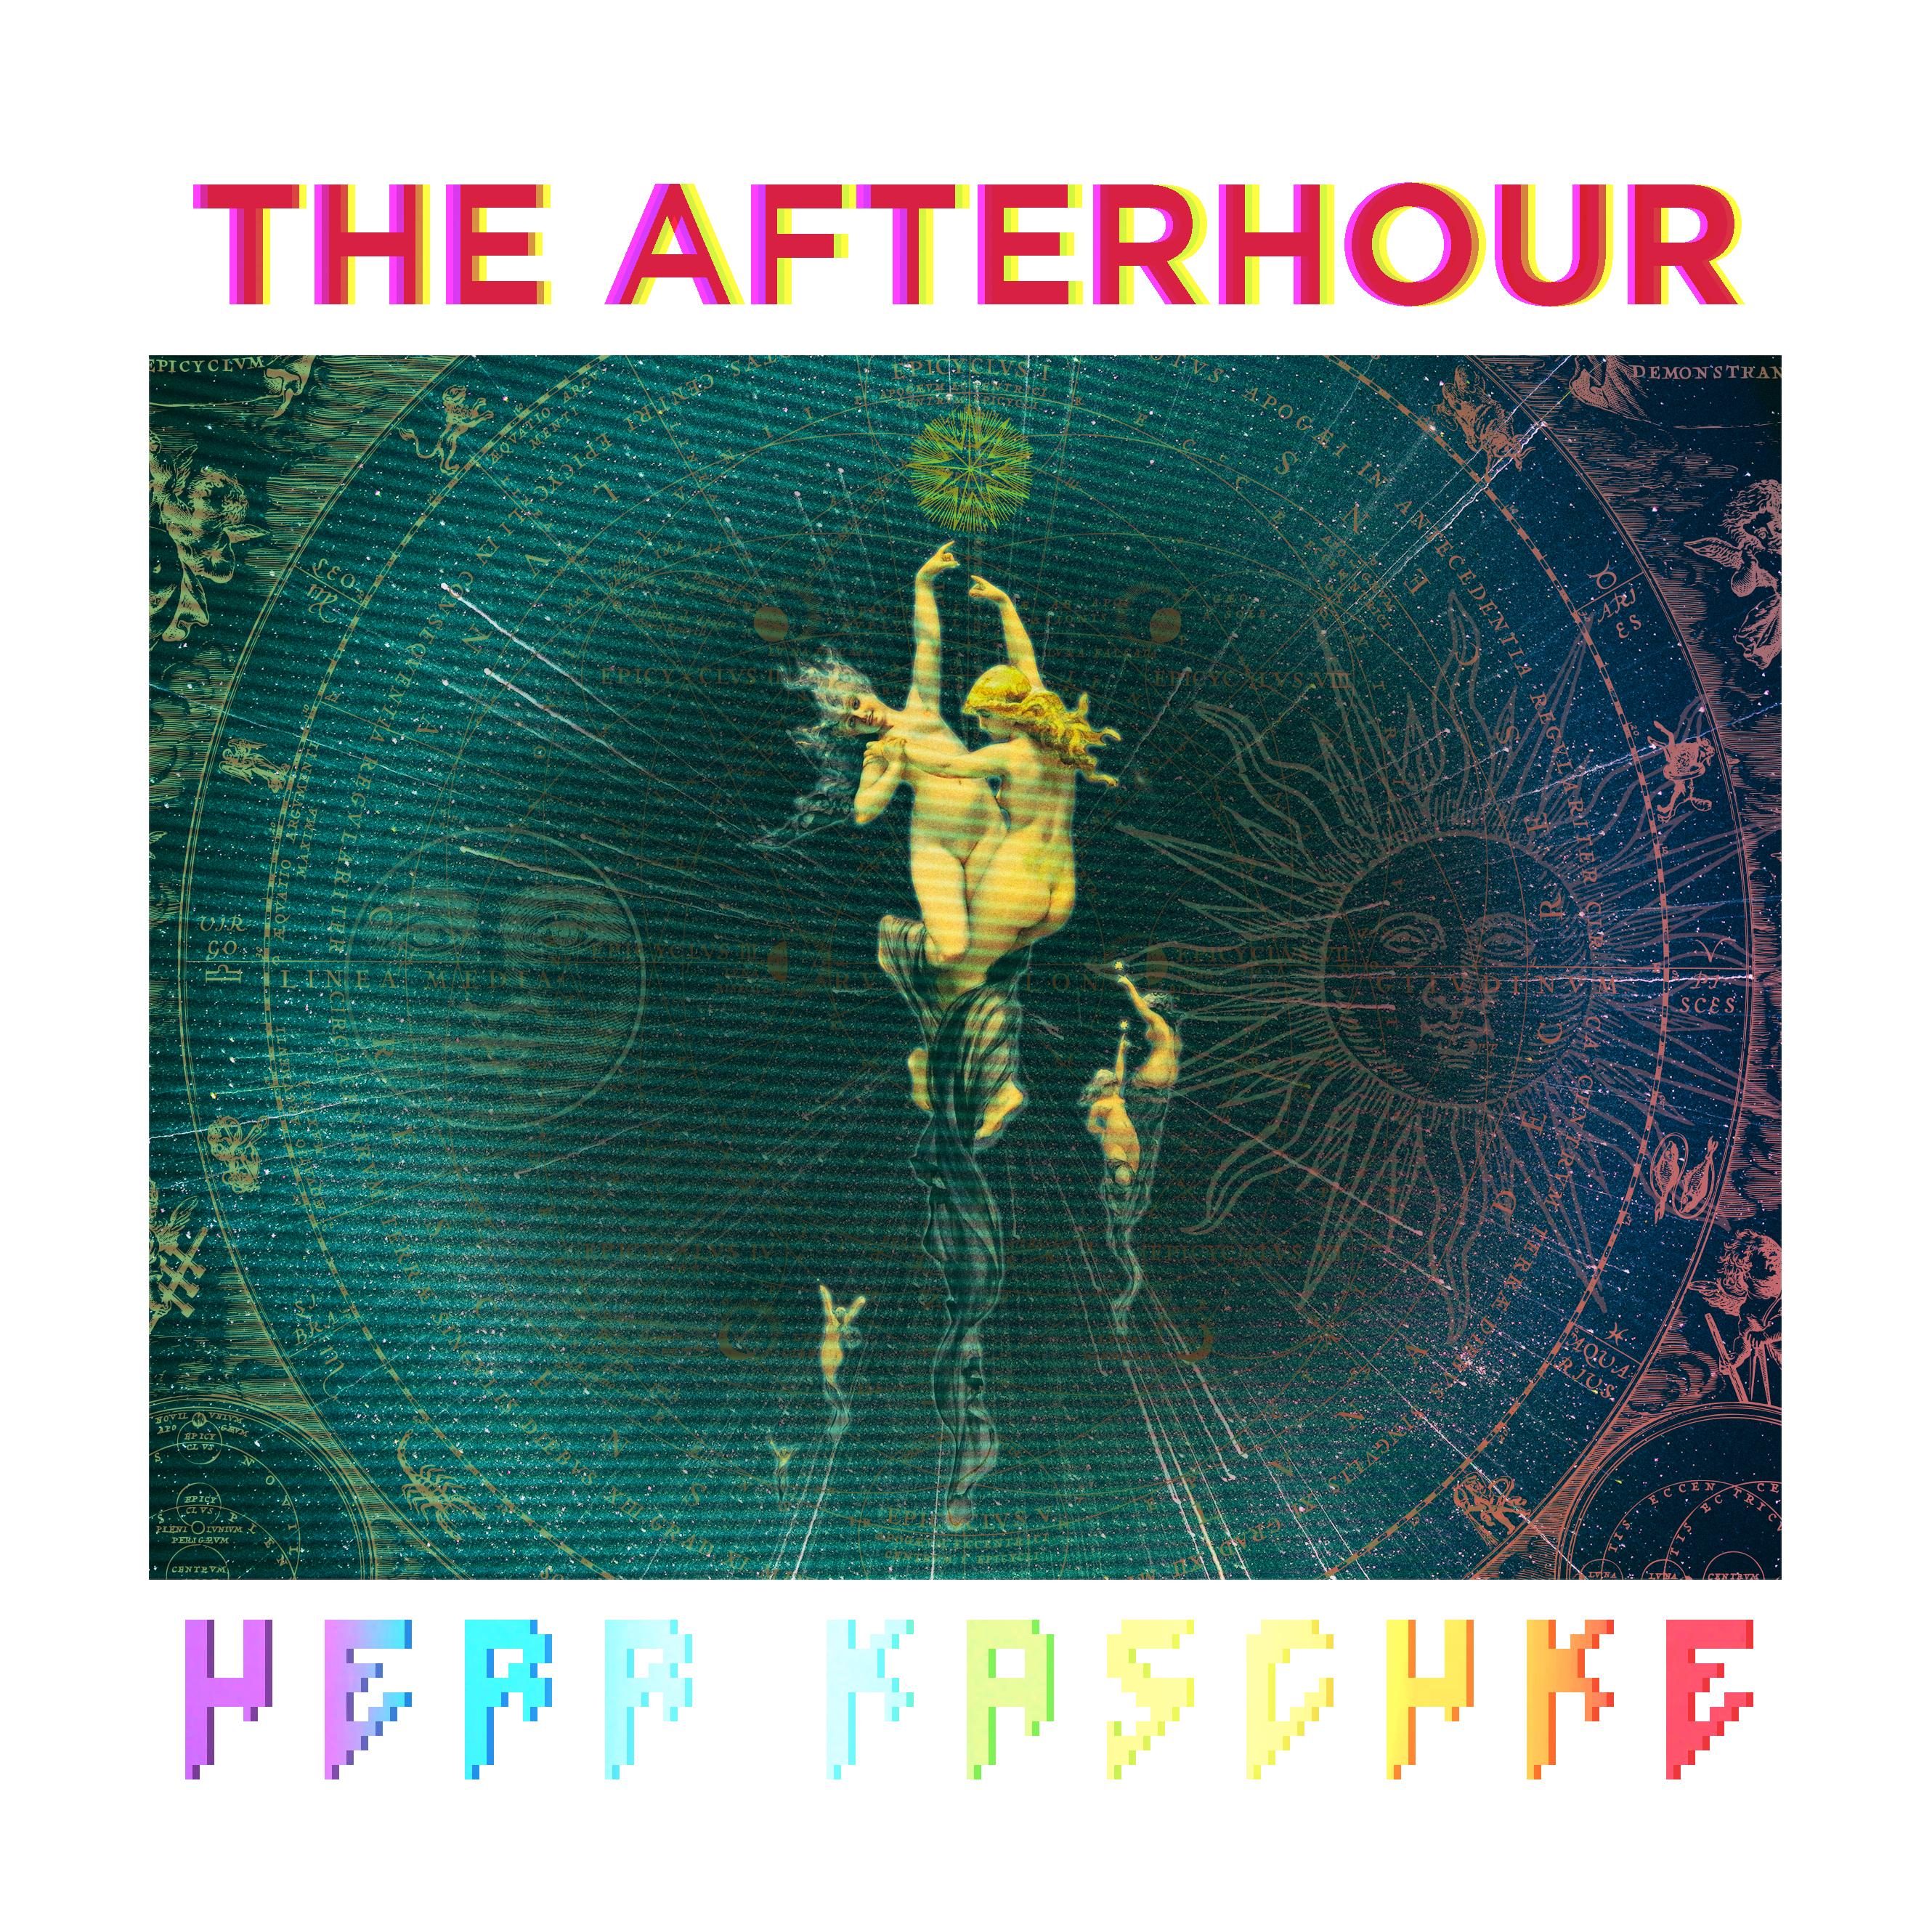 Herr Kaschke - The Afterhour